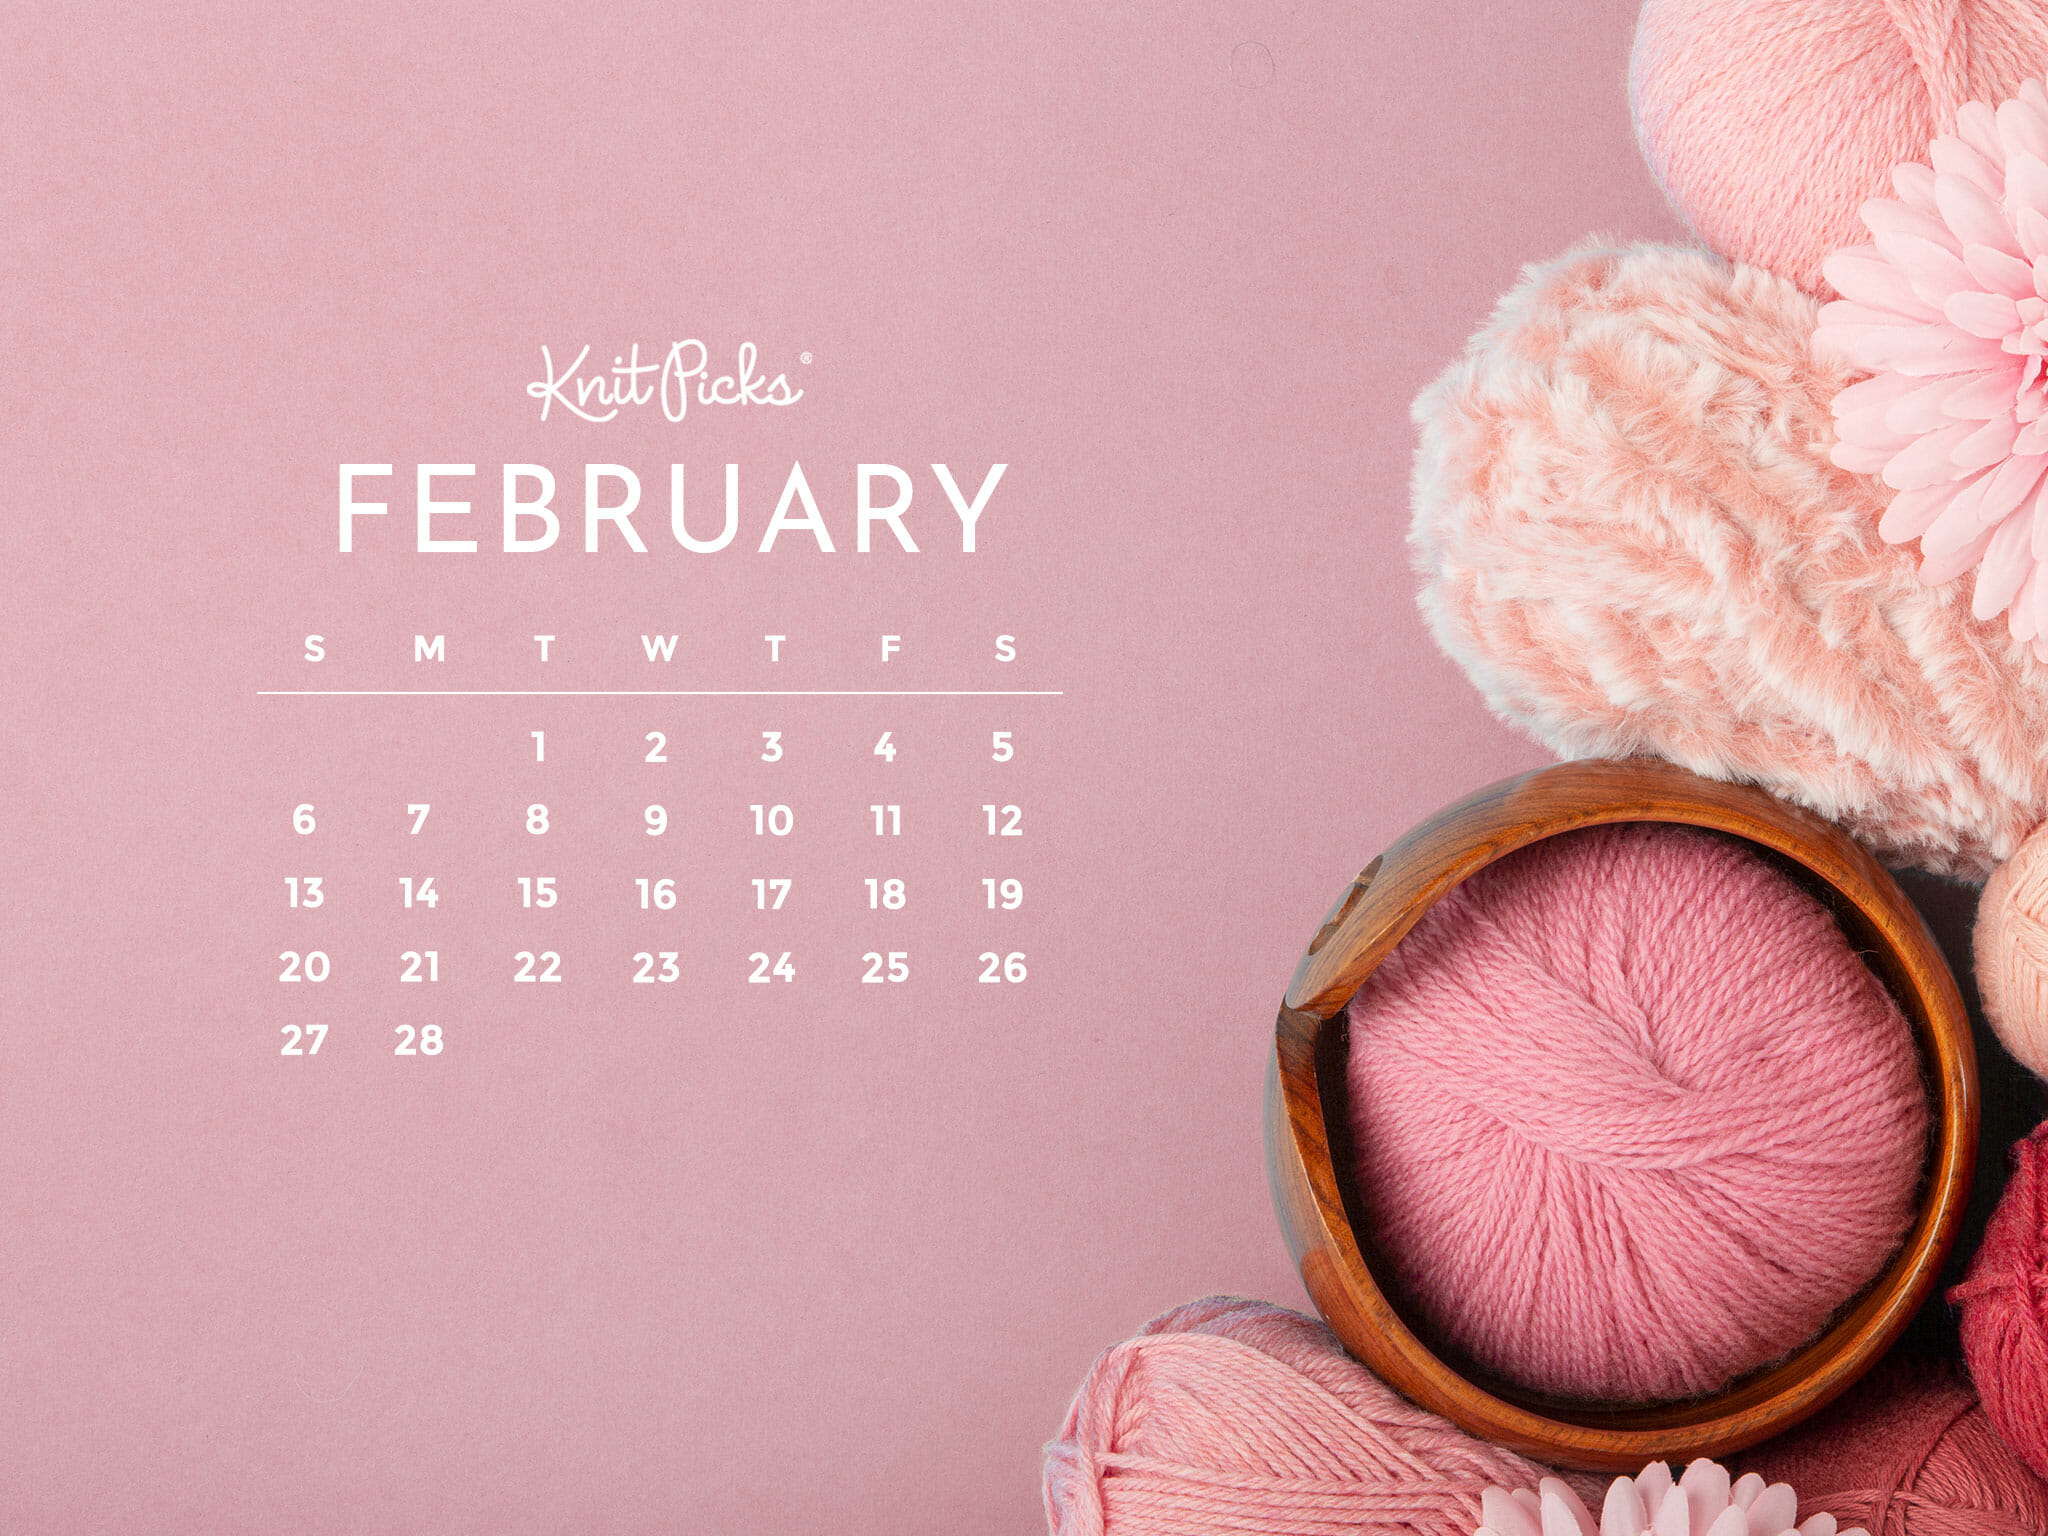 February 2022 Calendar Wallpaper Free Downloadable February 2022 Calendar - Knitpicks Staff Knitting Blog